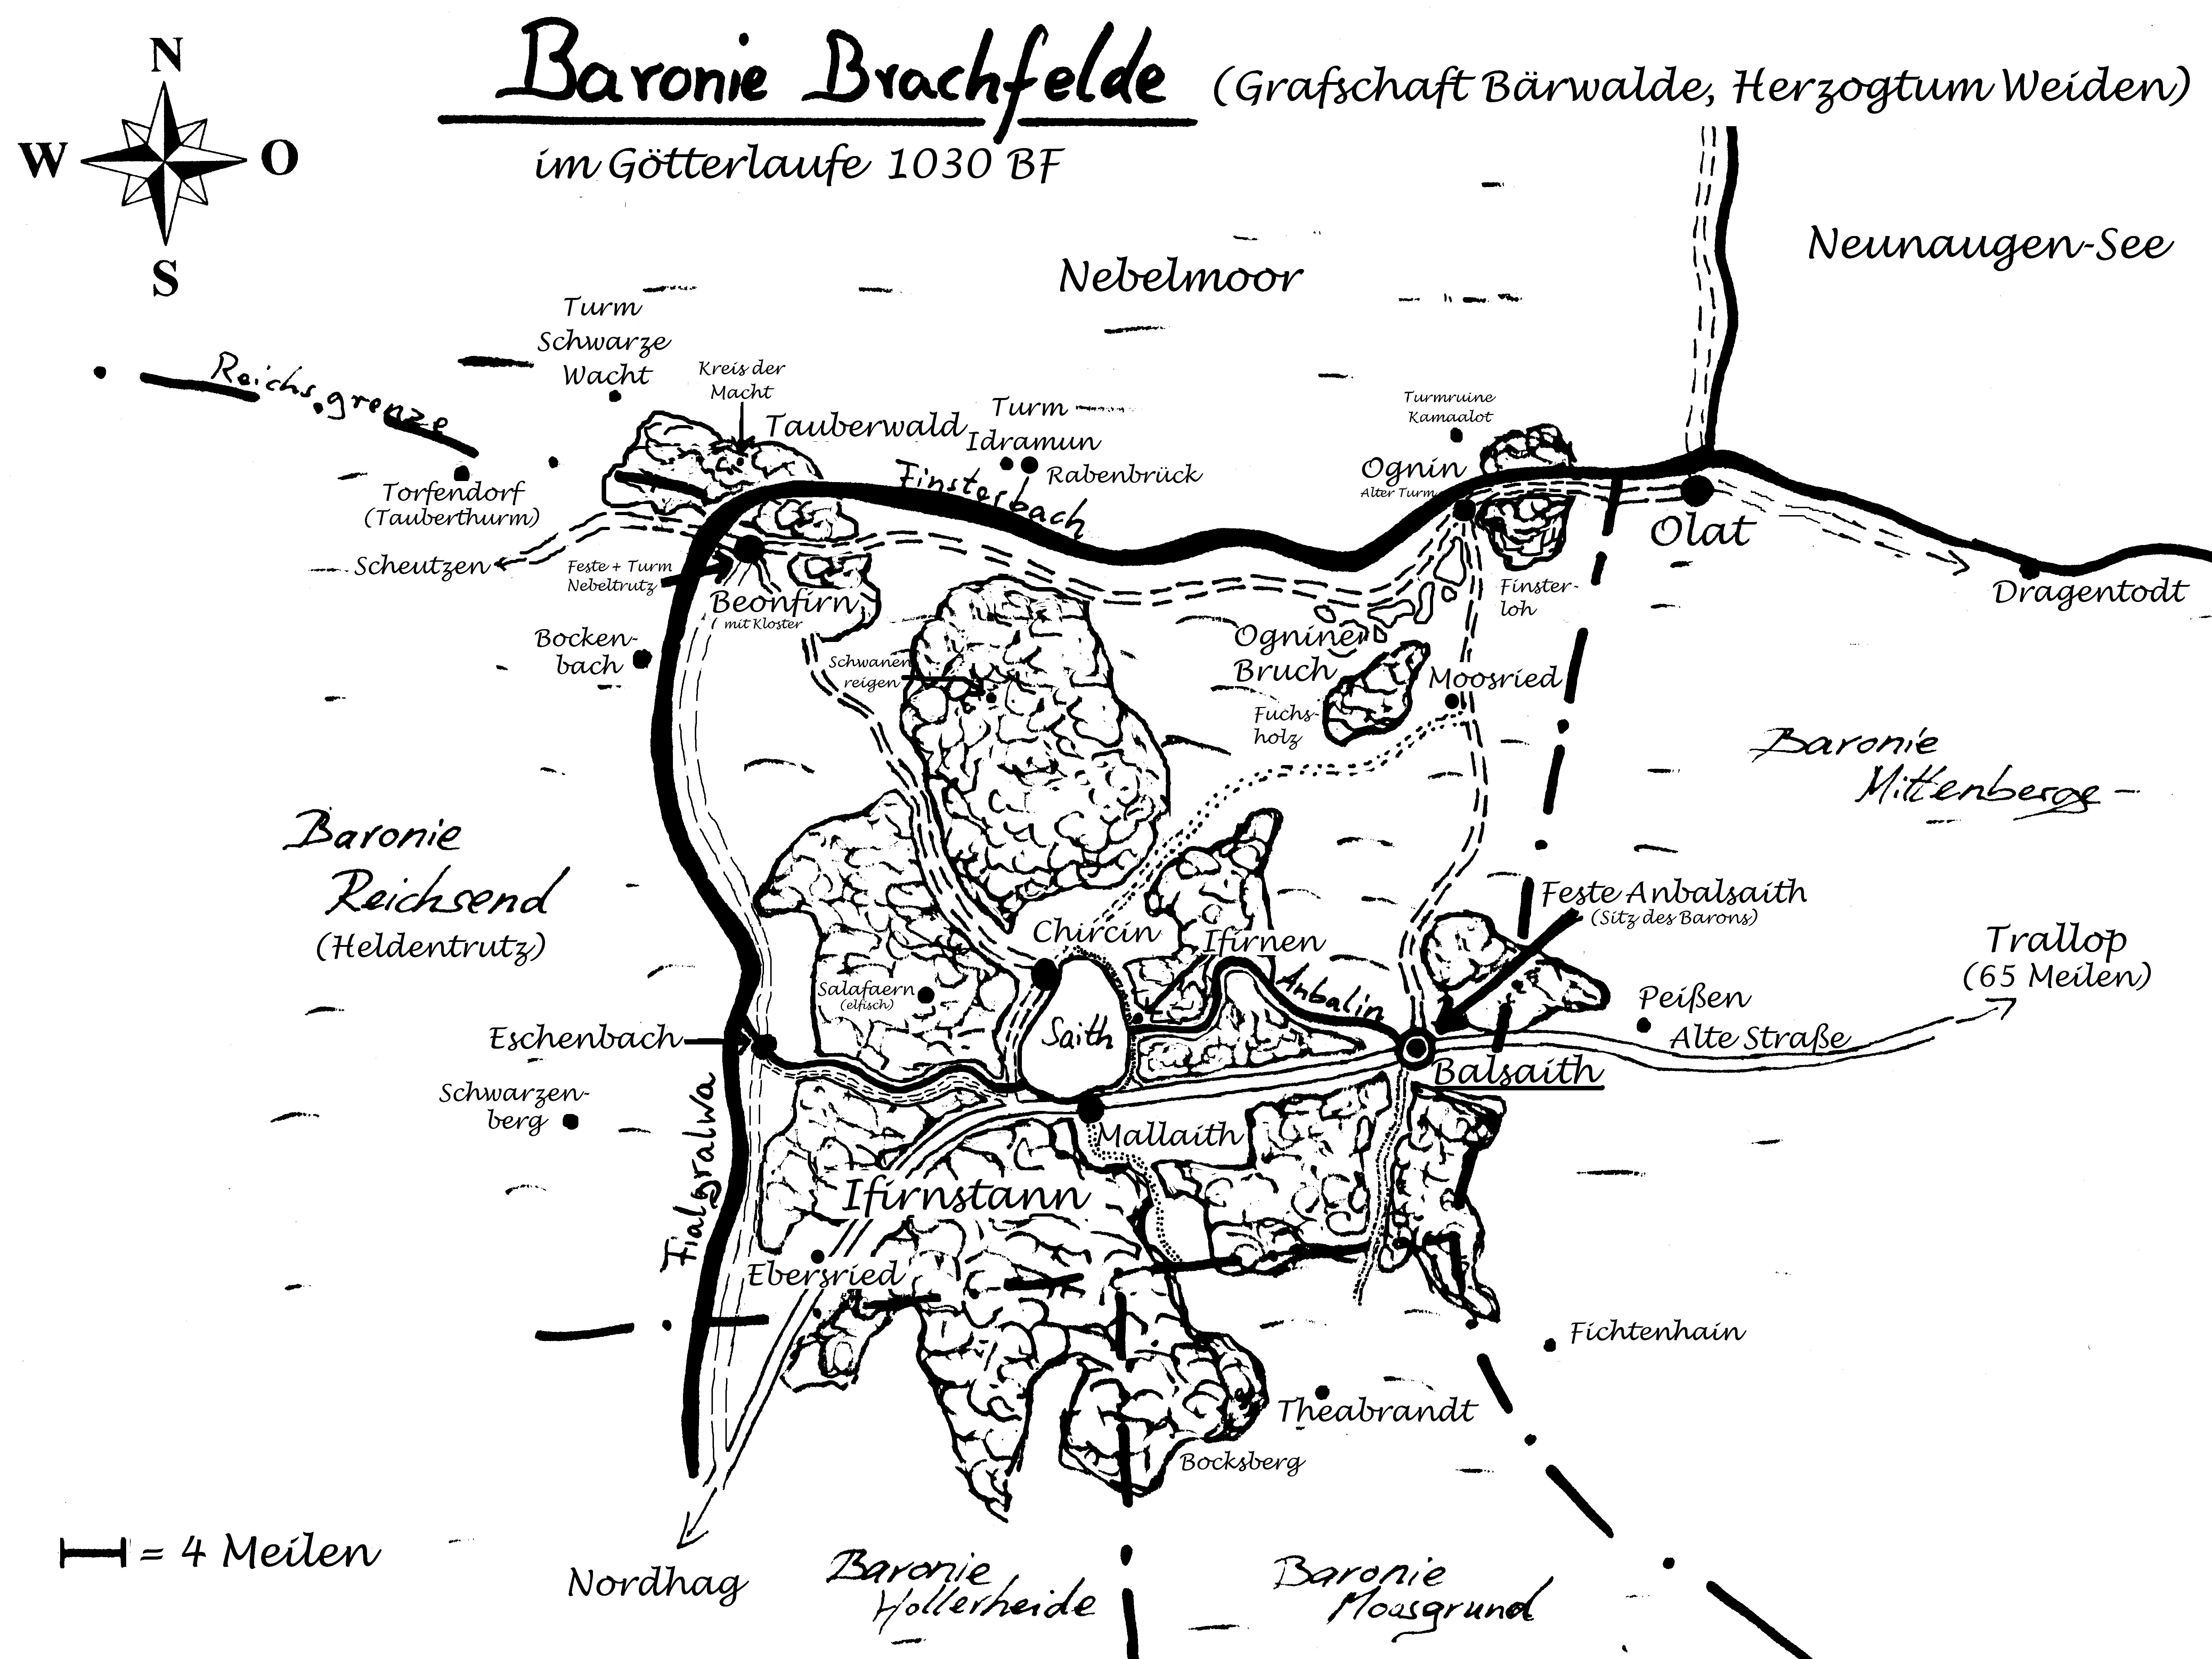 Baronie Brachfelde